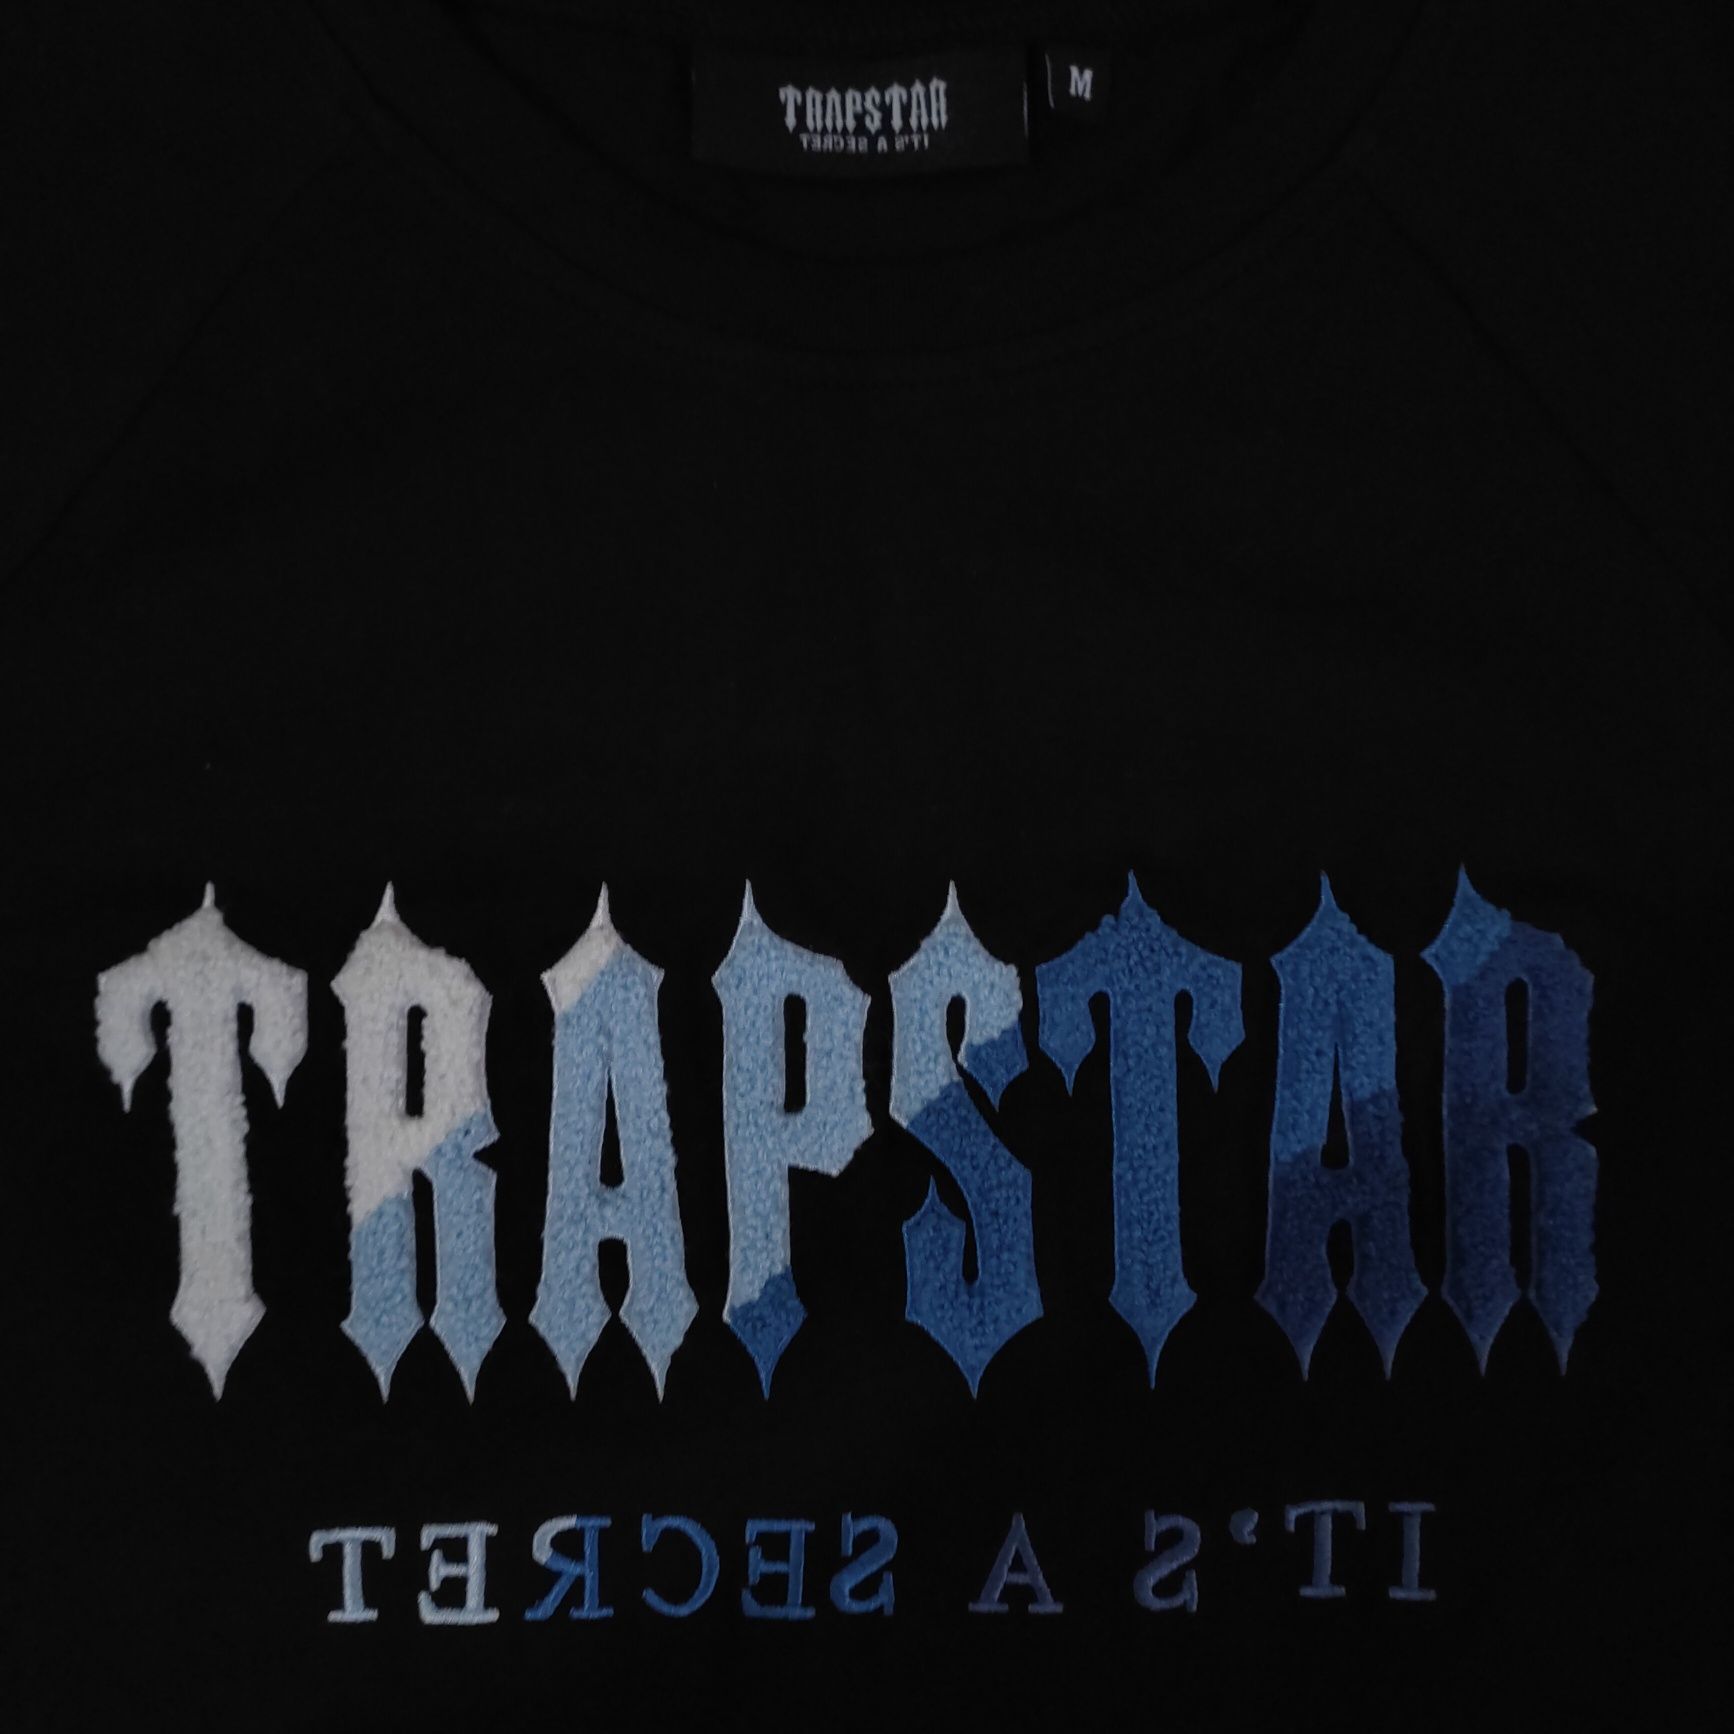 Tricou Trapstar rep